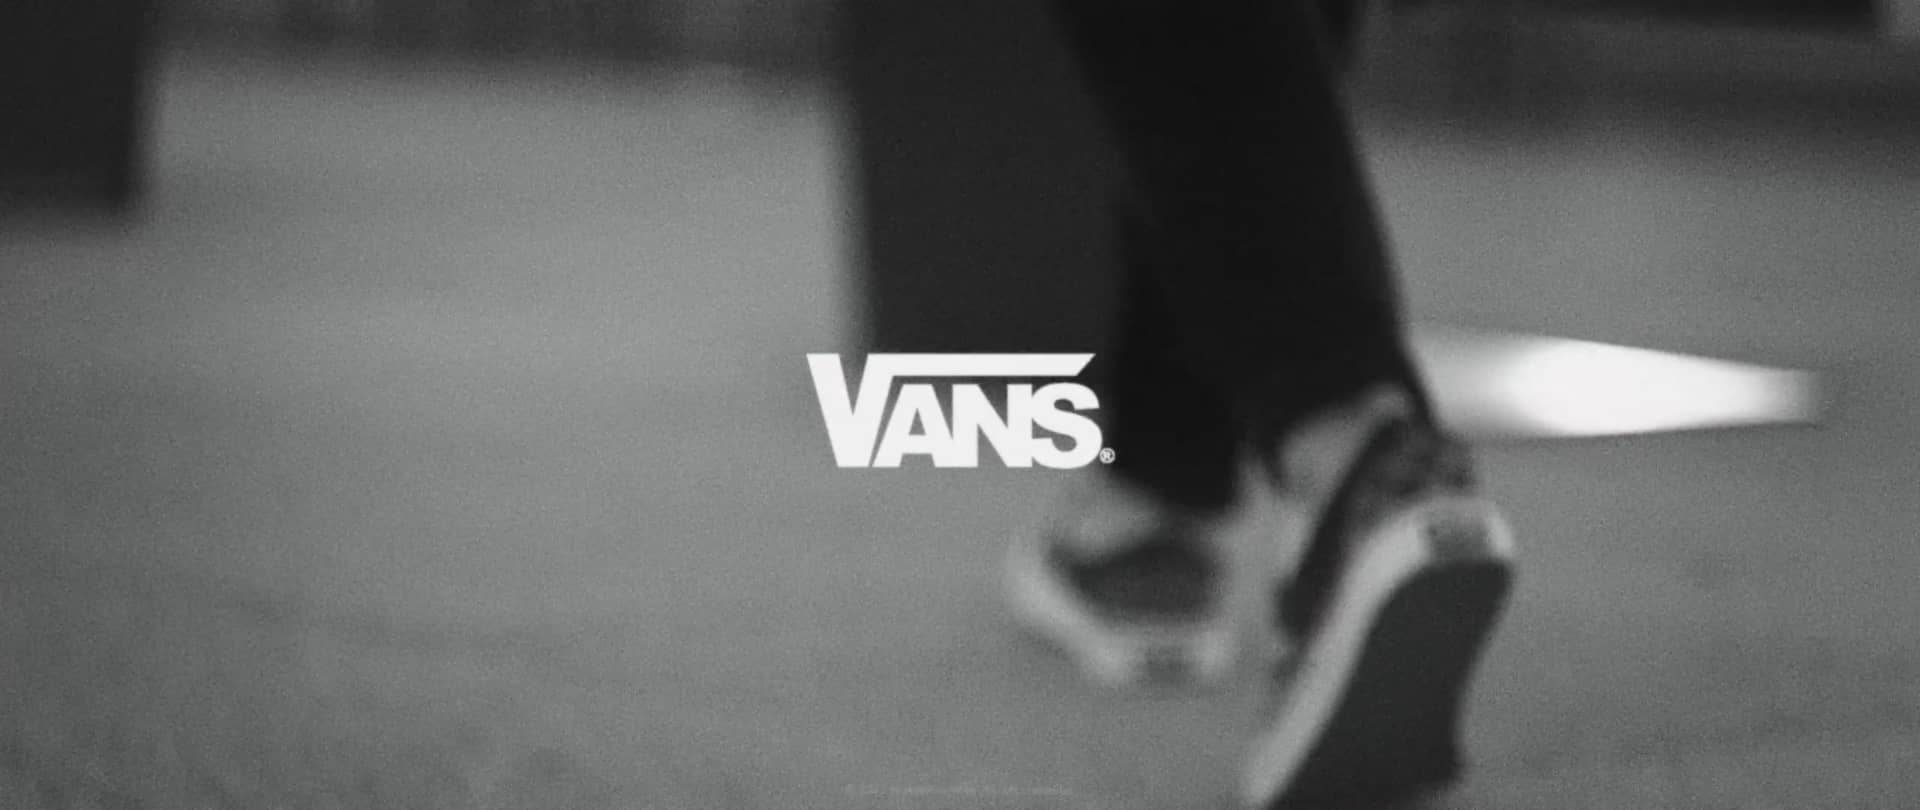 Vans [Commercial] on Vimeo